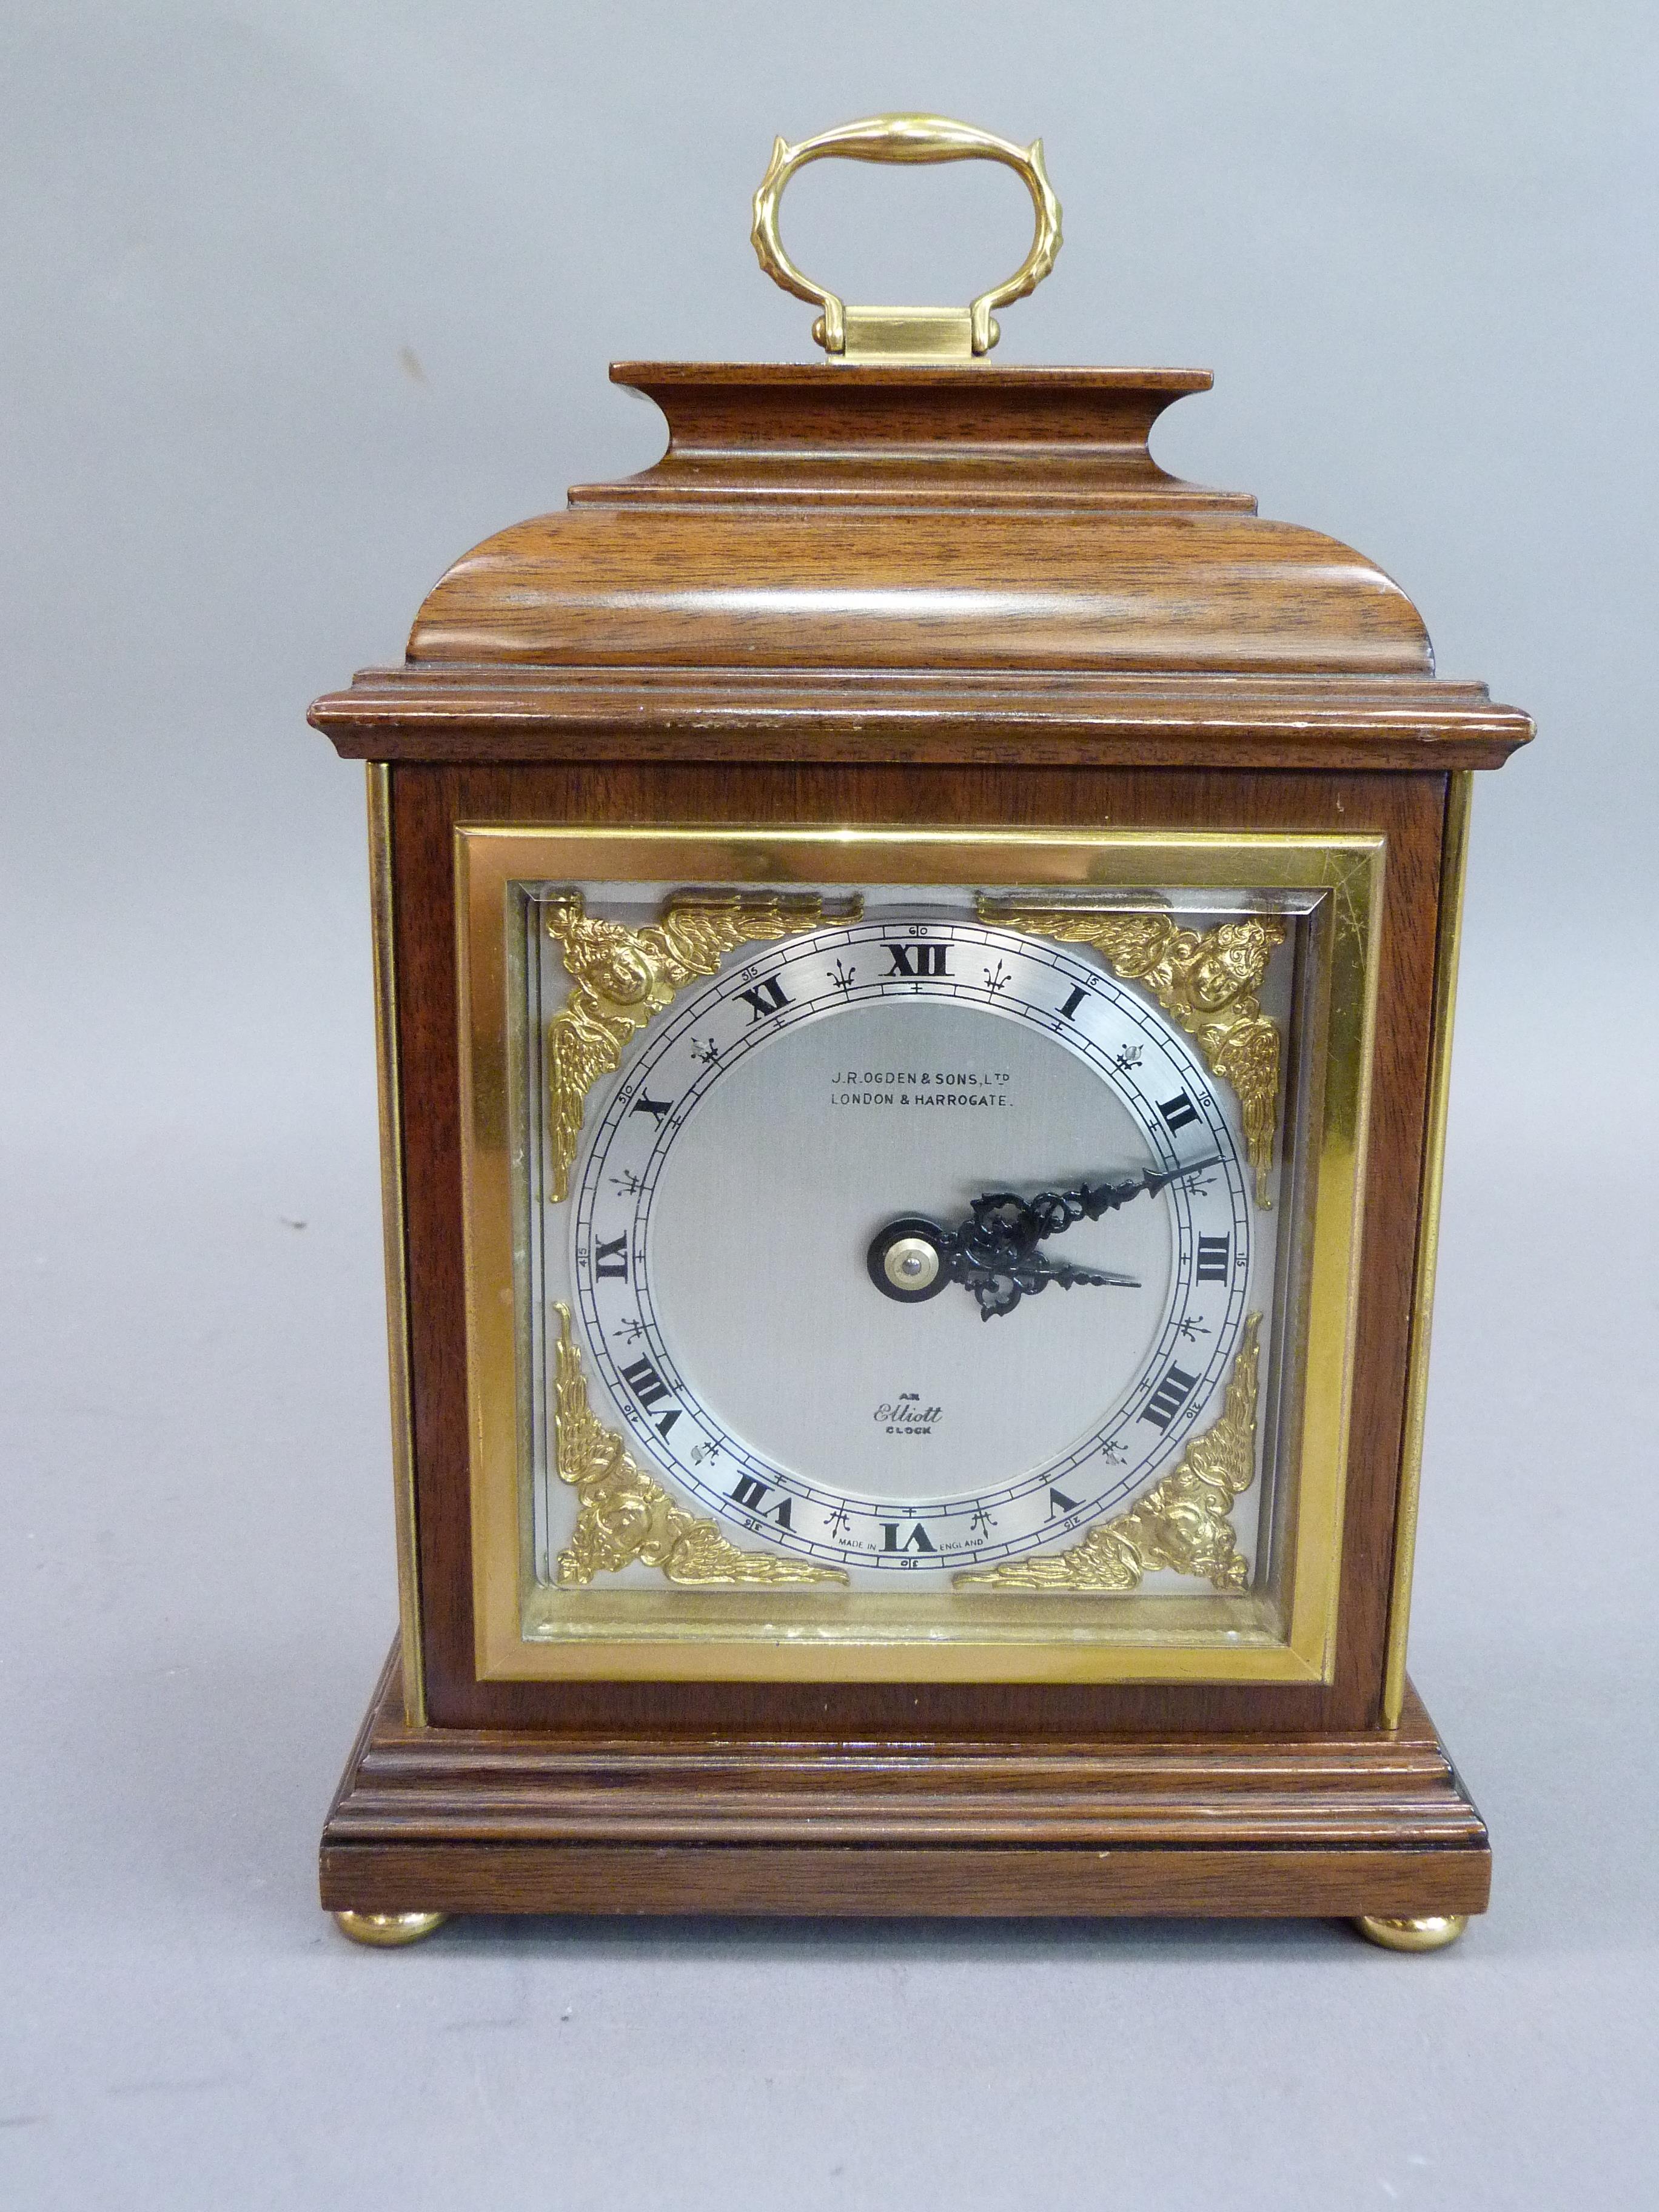 Late twentieth century mahogany bracket style mantel clock by Elliot having a silvered dial, chapter